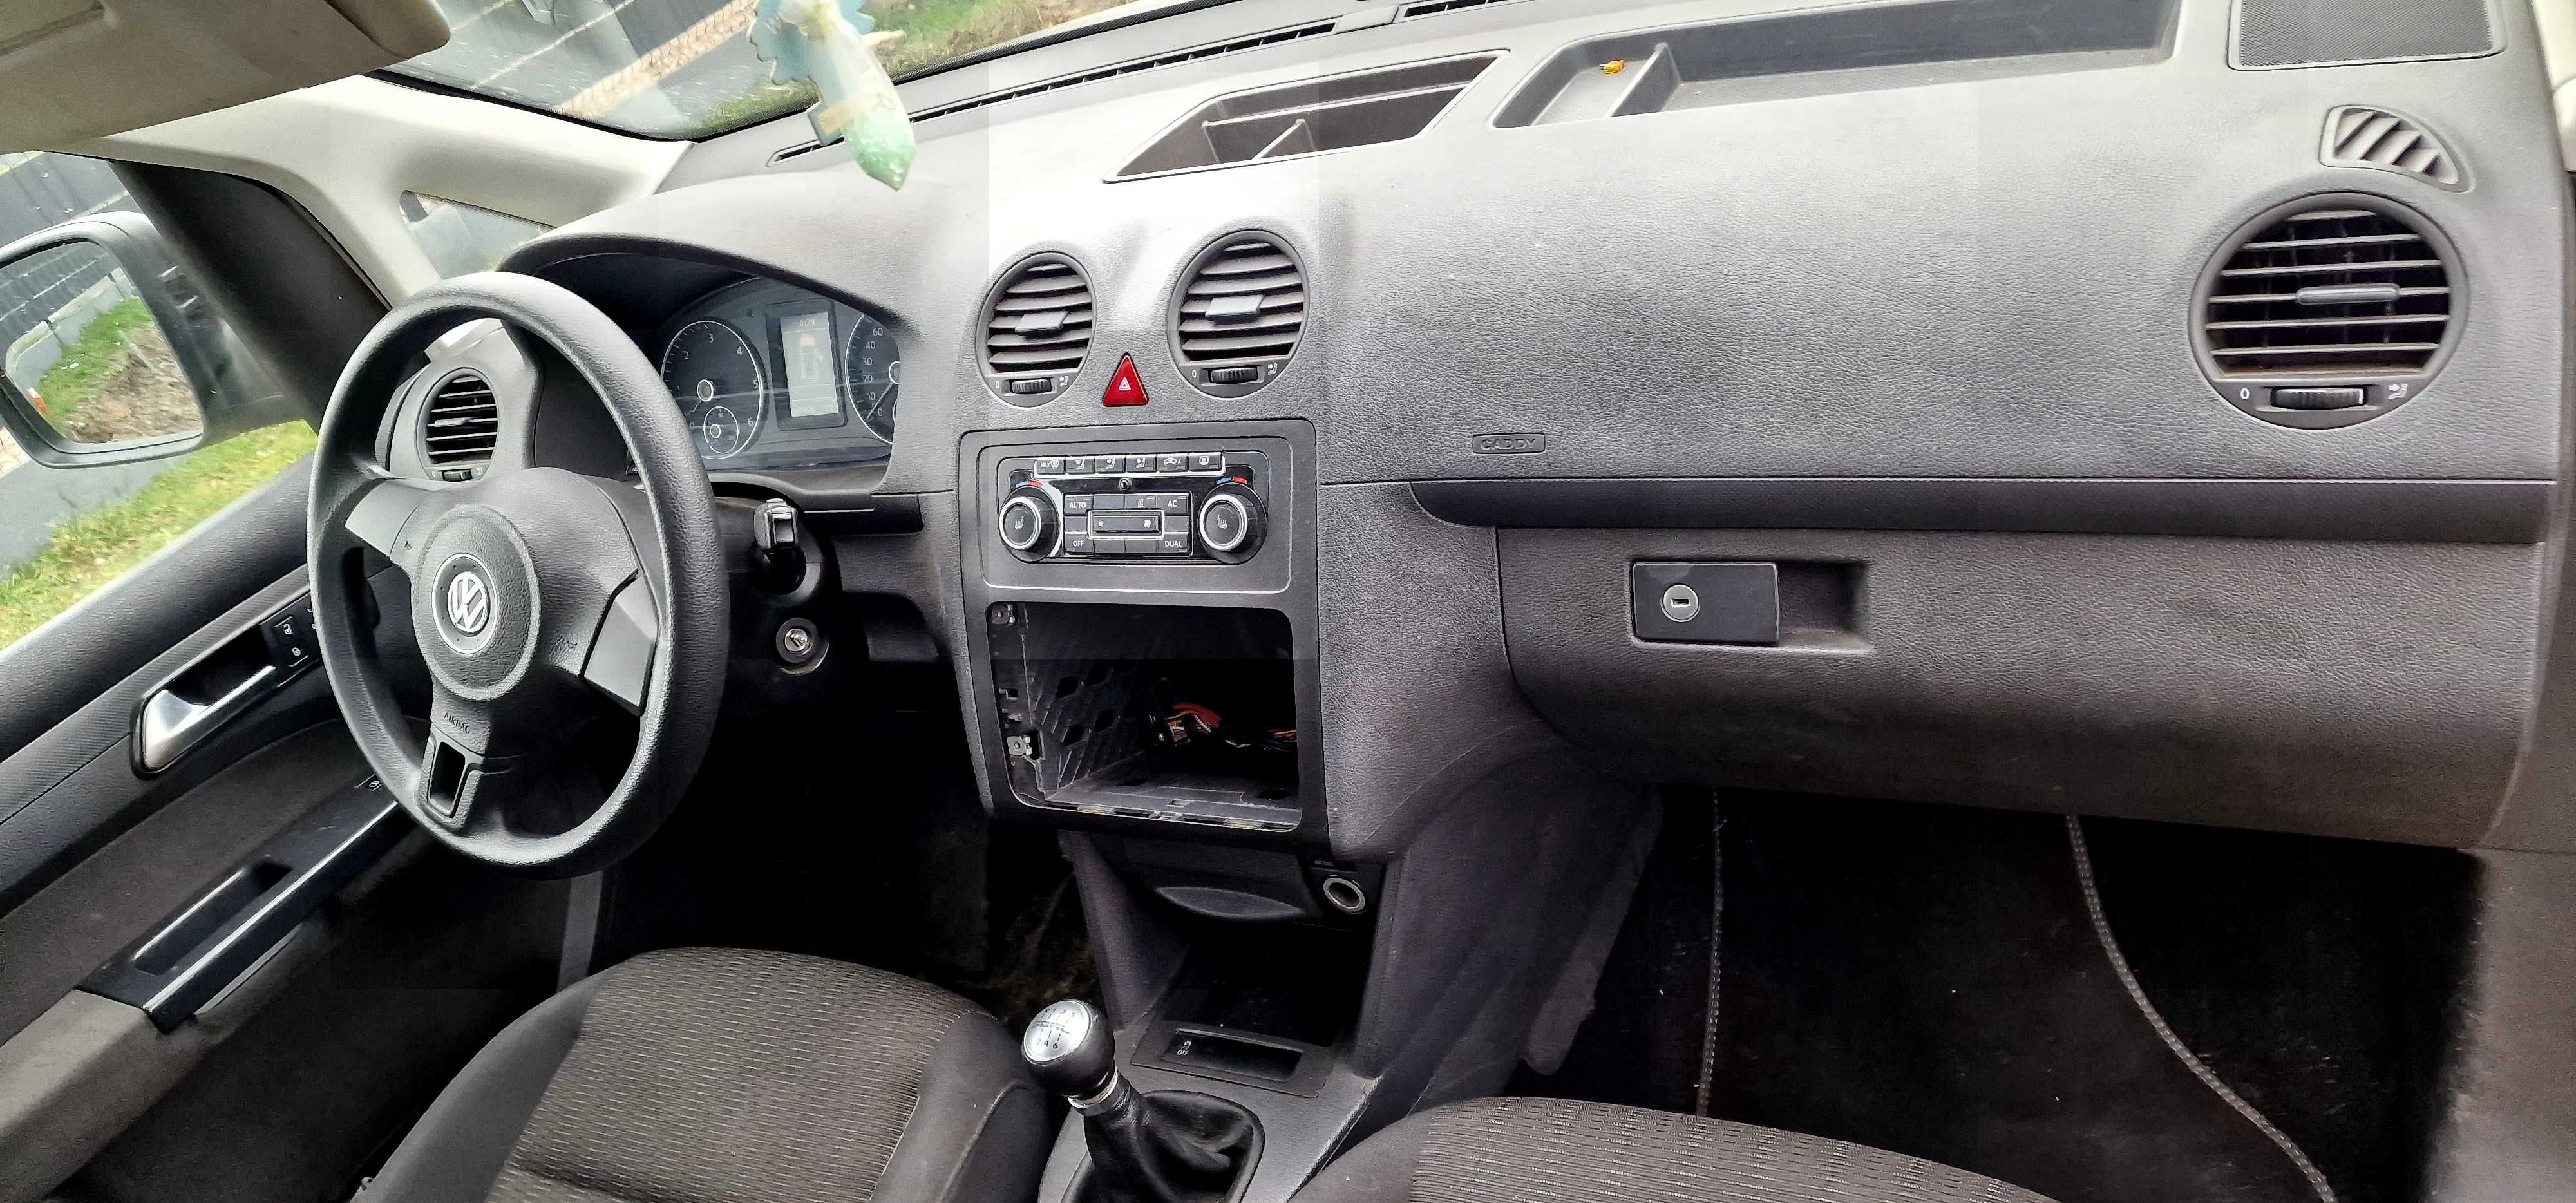 Volkswagen Caddy 1598.00 tdi 2012 rok